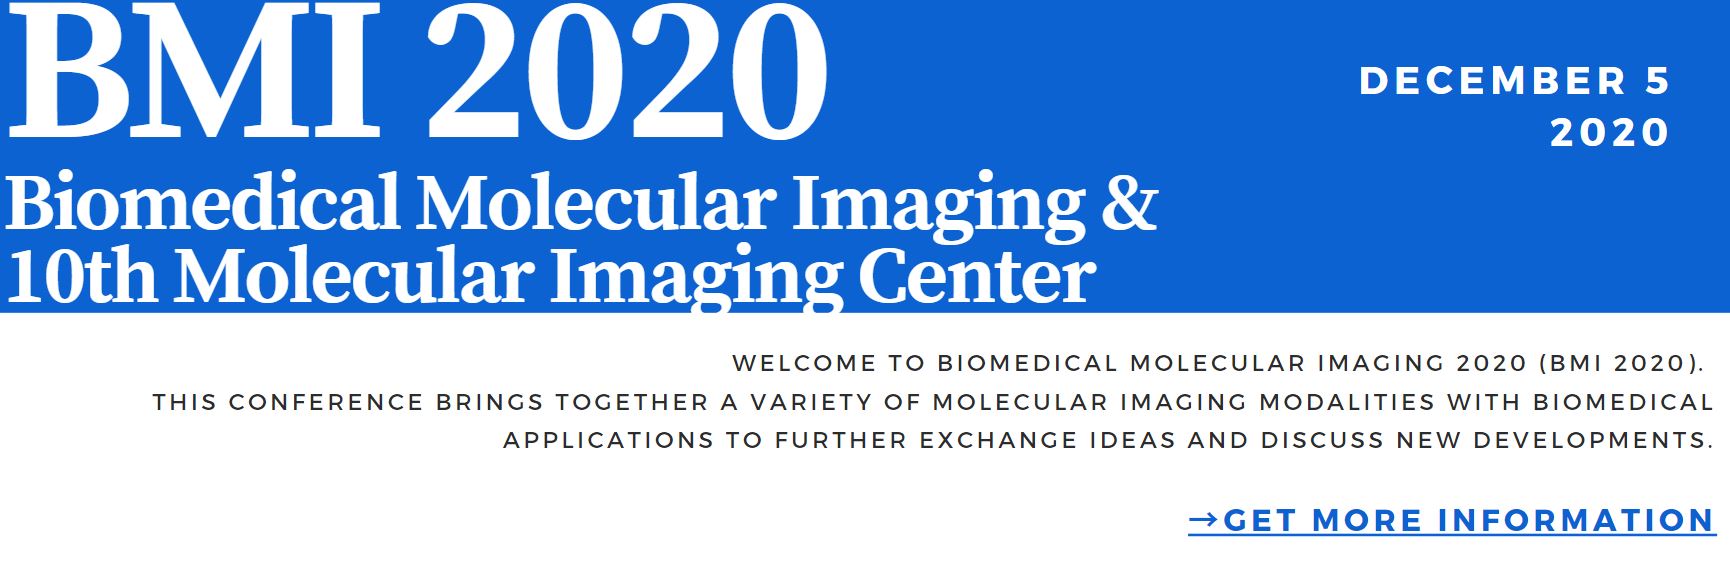 2020 Biomedical Molecular Imaging & 10th Molecular Imaging Center Symposium